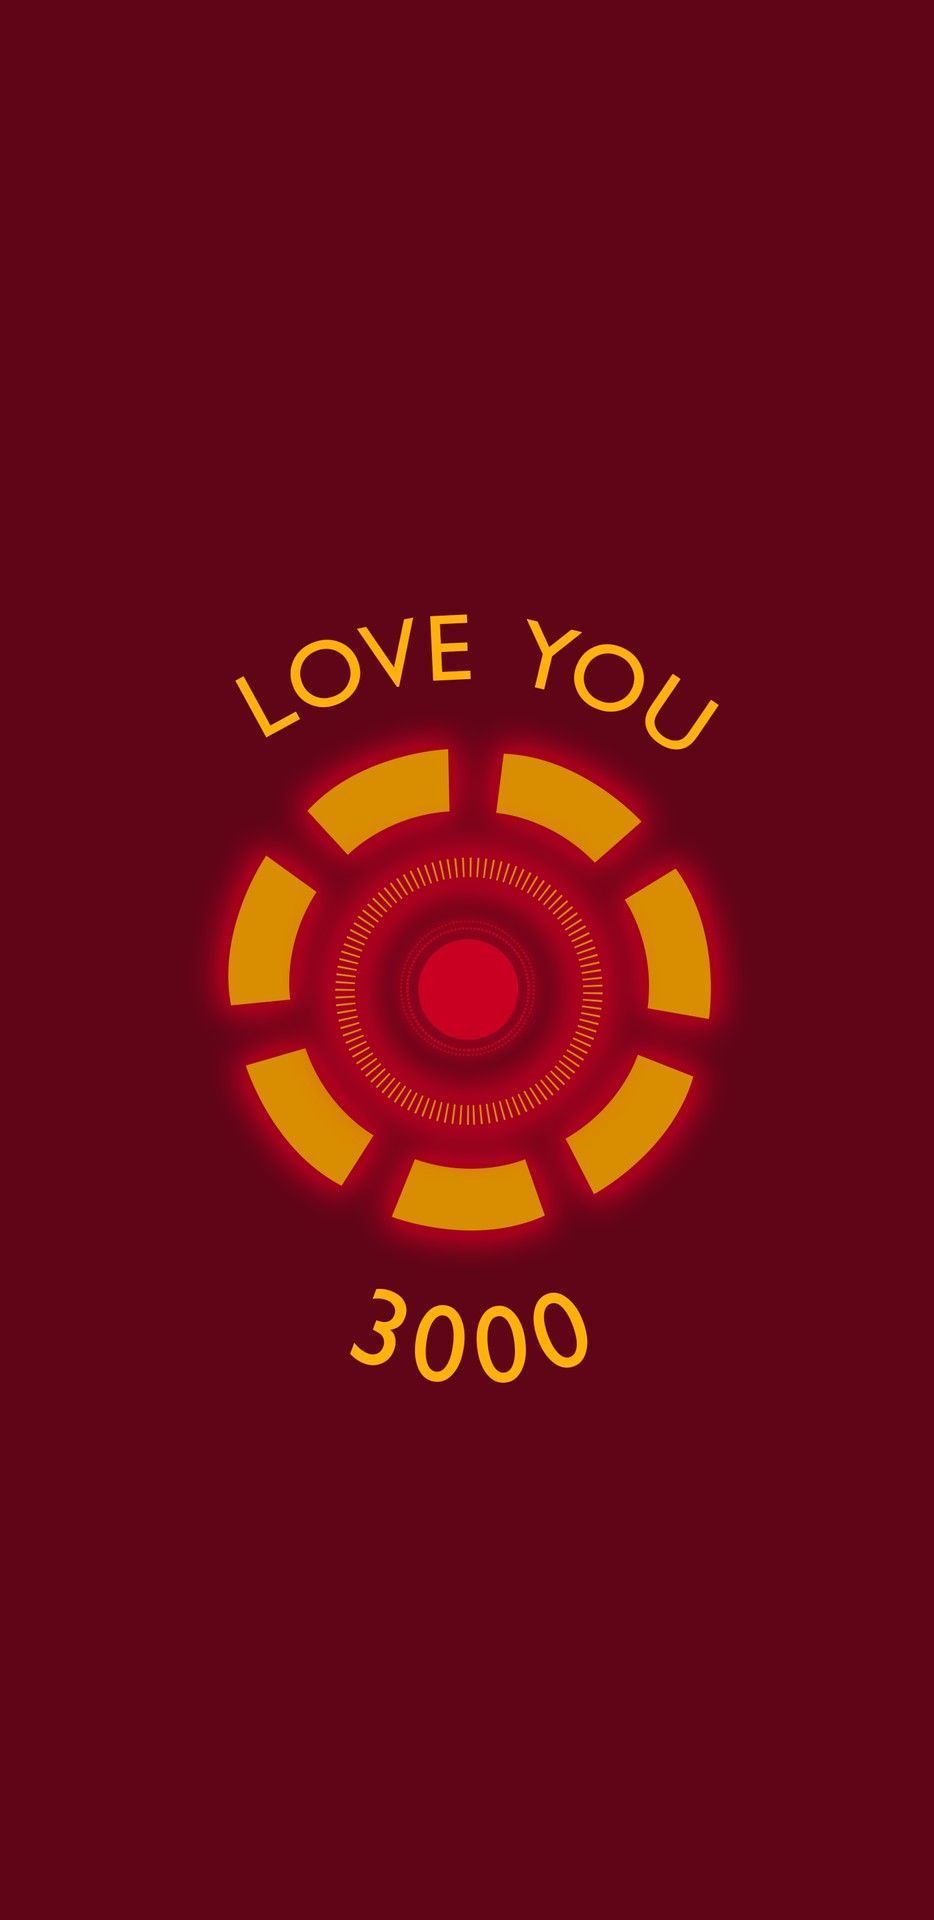 I Love You 3000 Tony Stark Iron Man Marvel Cinematic Universe Marvel Comics Avengers Infinity War Av 934x1920